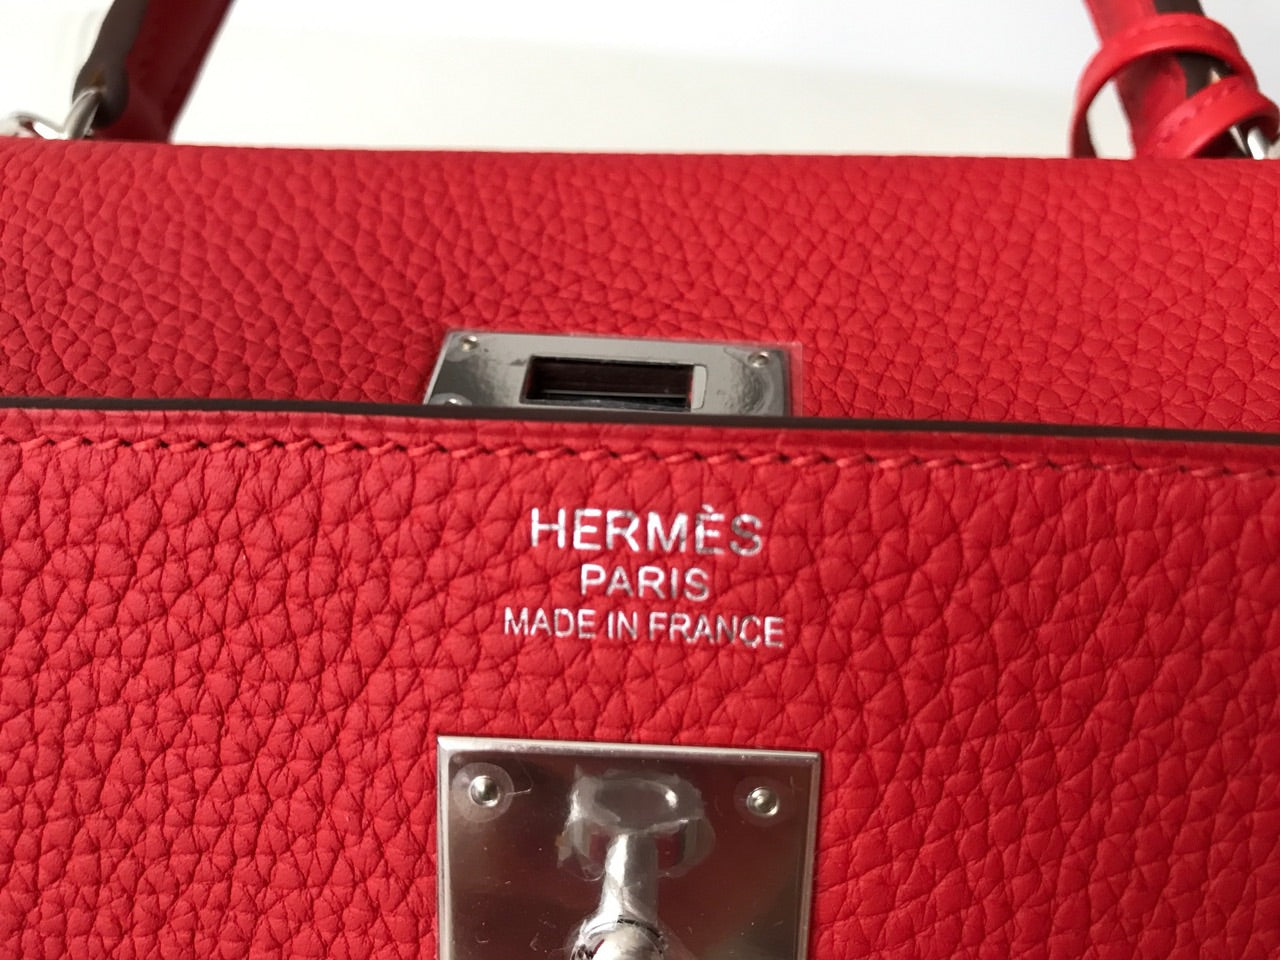 Hermes Kelly 35 Bag Rouge Garance Togo Palladium Hardware • MIGHTYCHIC • 